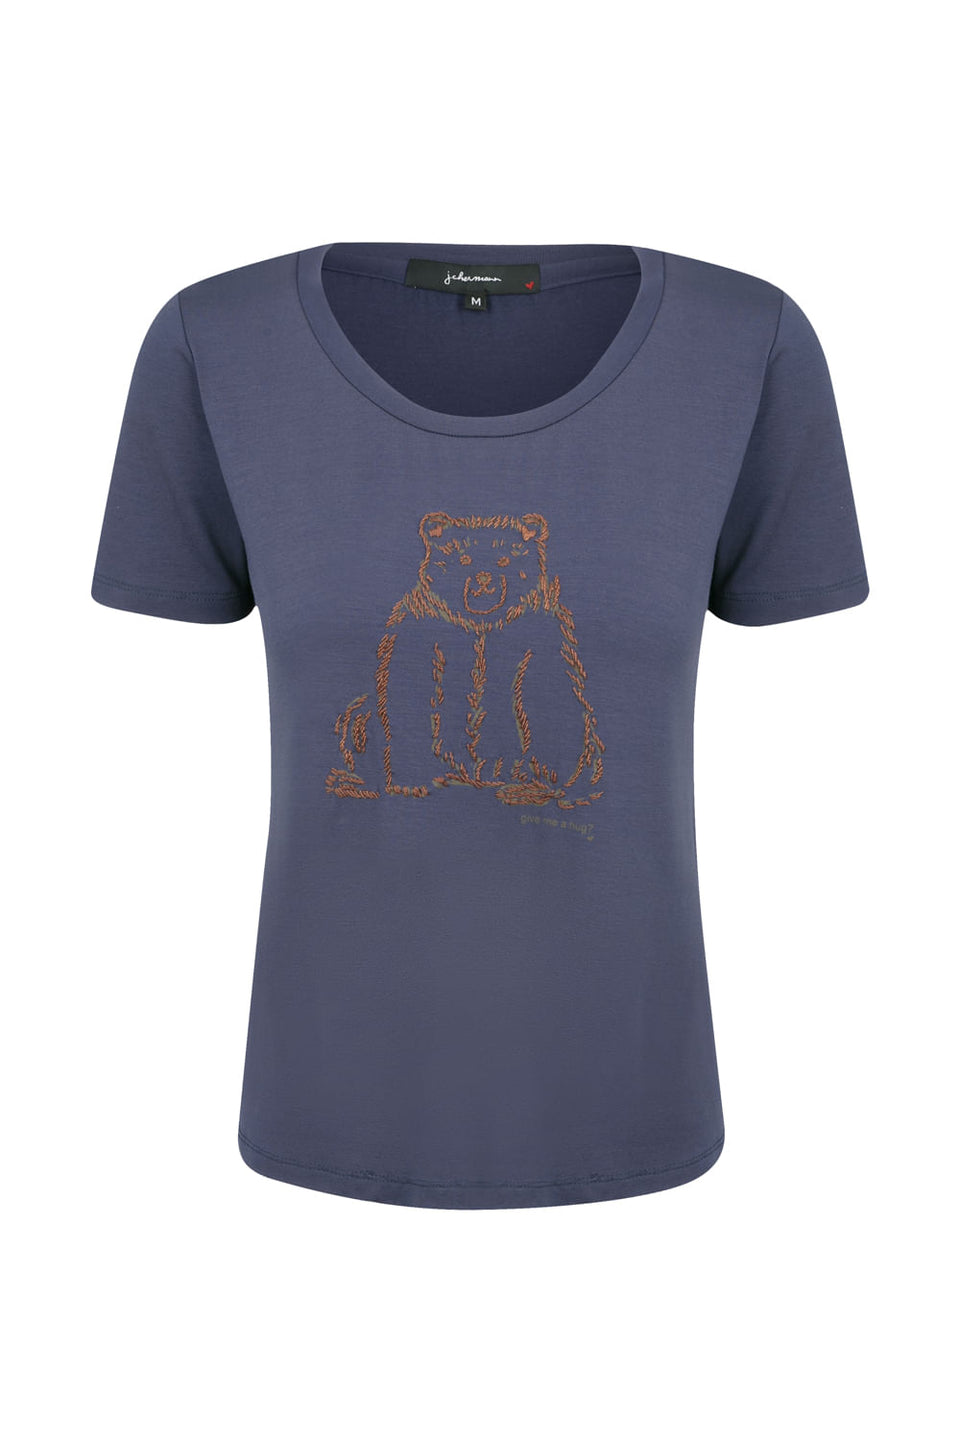 Camiseta Urso Hug Azul Marinho